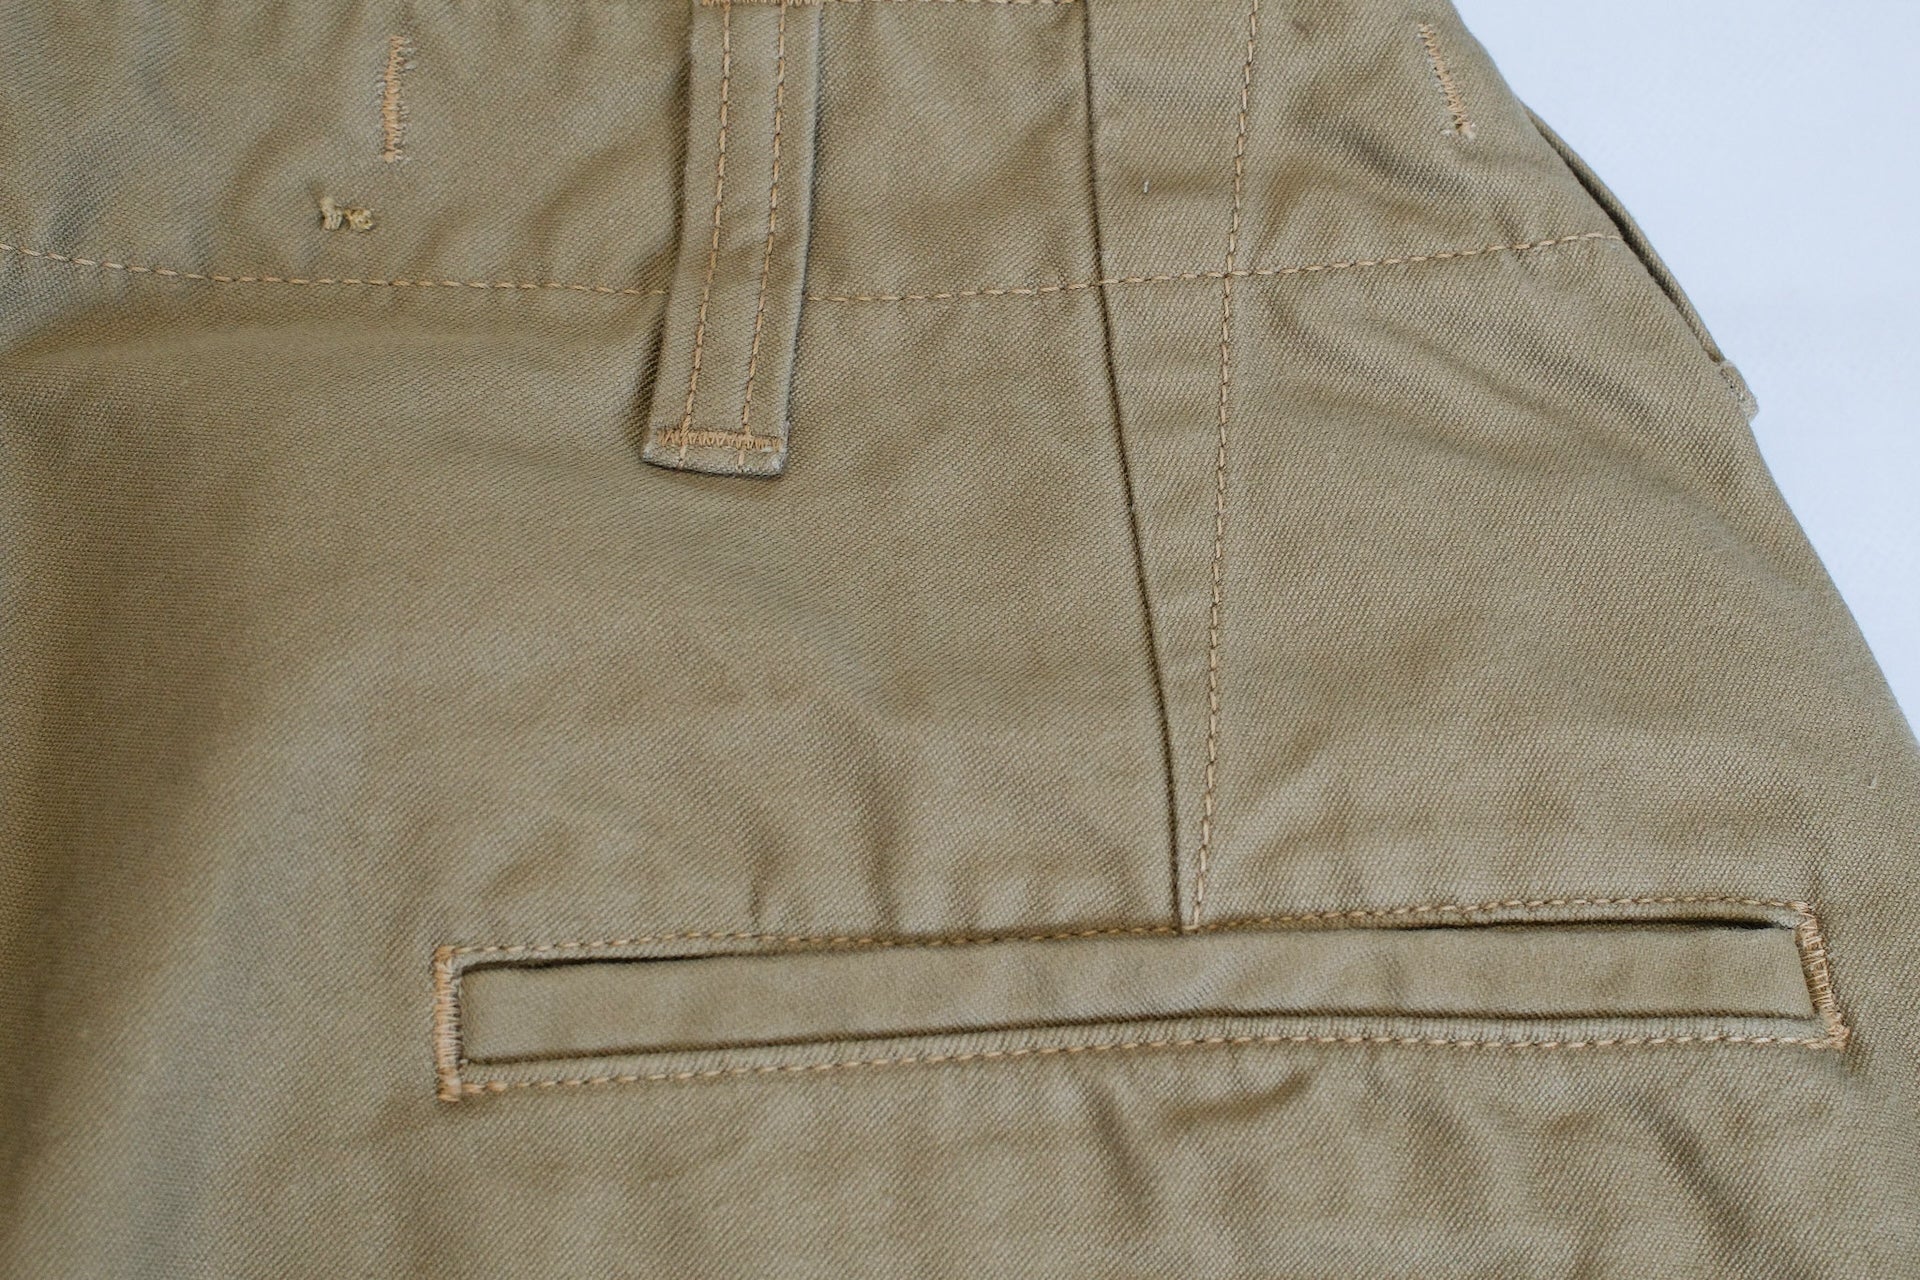 Freewheelers "M-1943" Military Back Satin Trousers (Dark Tan)